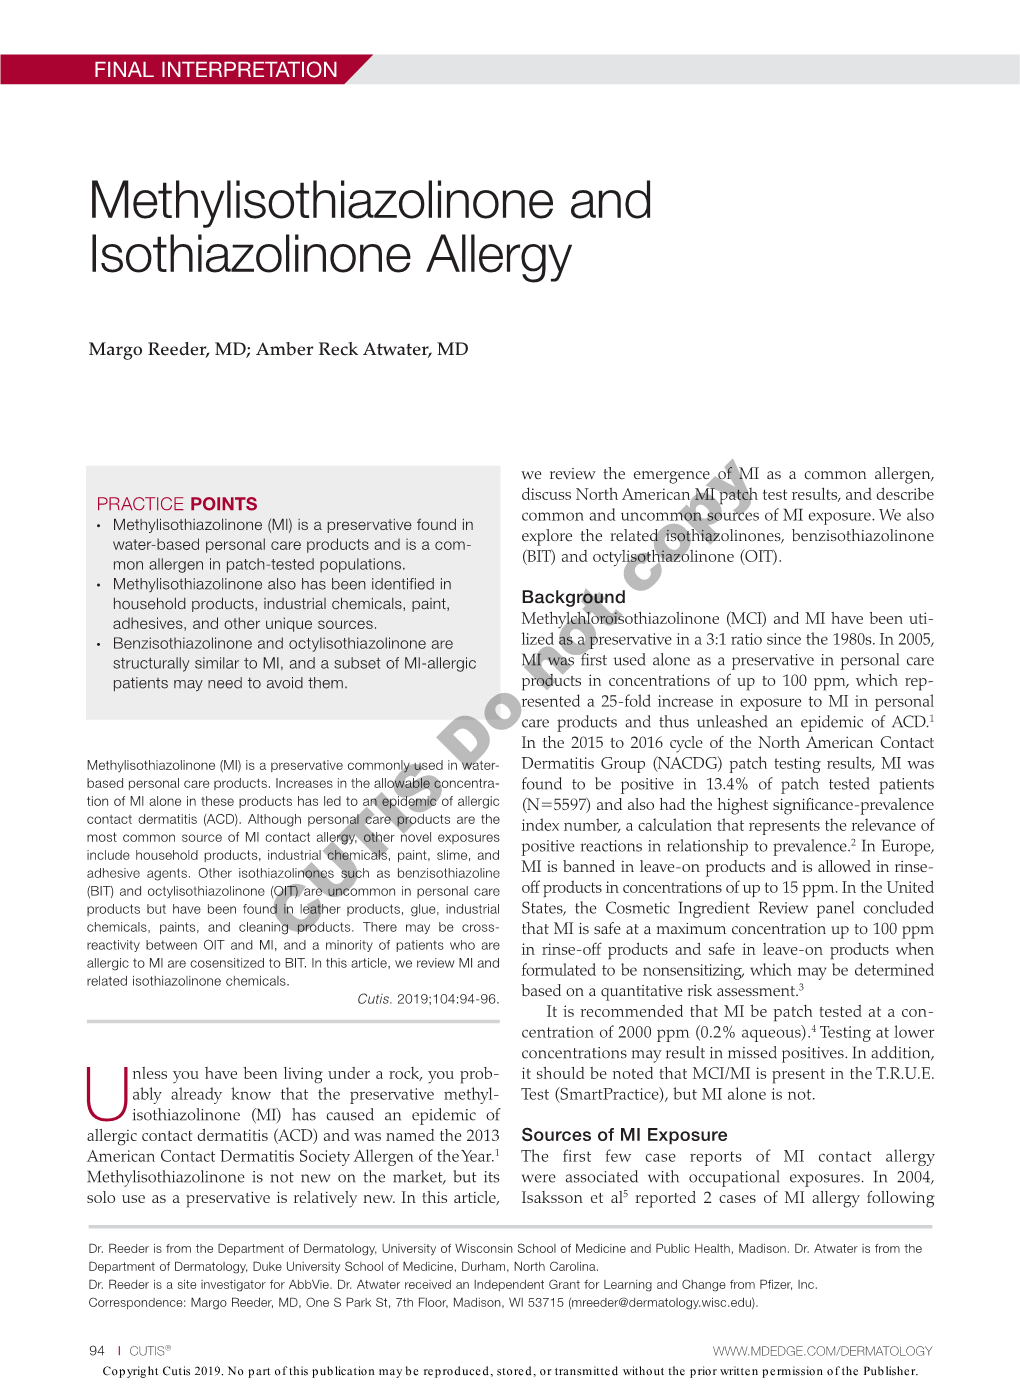 Methylisothiazolinone and Isothiazolinone Allergy